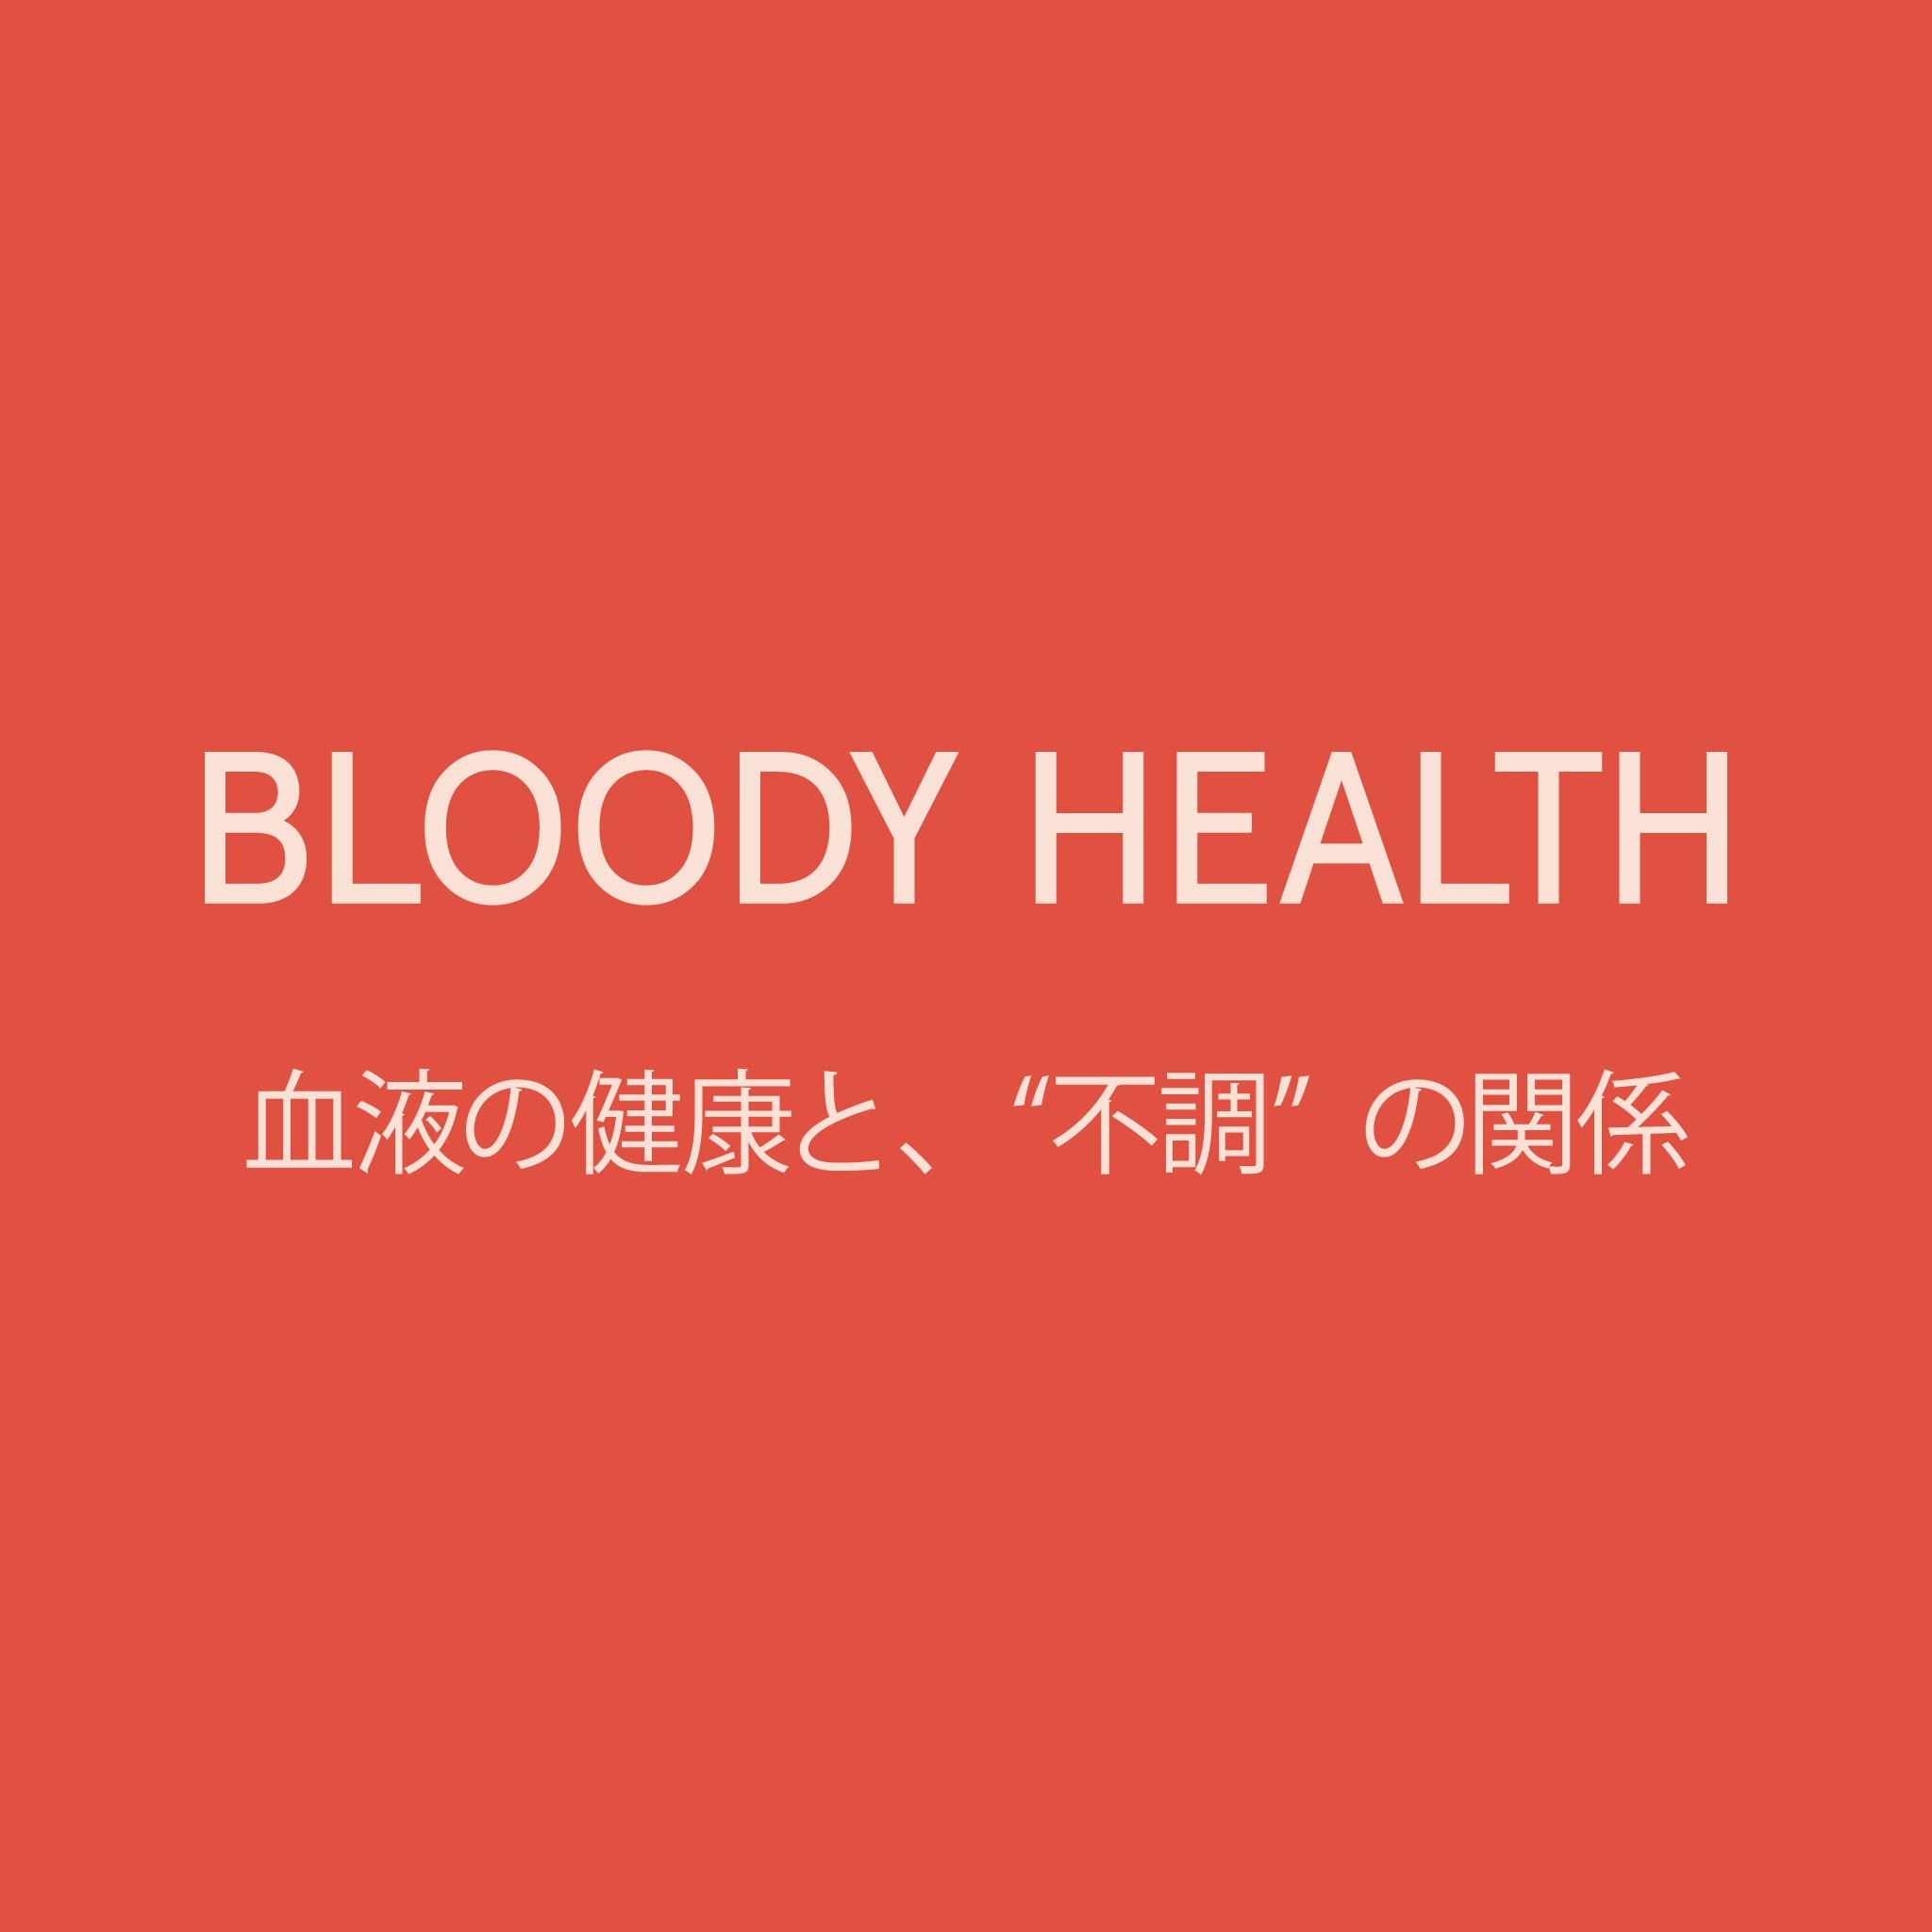 BLOODY HEALTH 血液の健康と、“不調”の関係